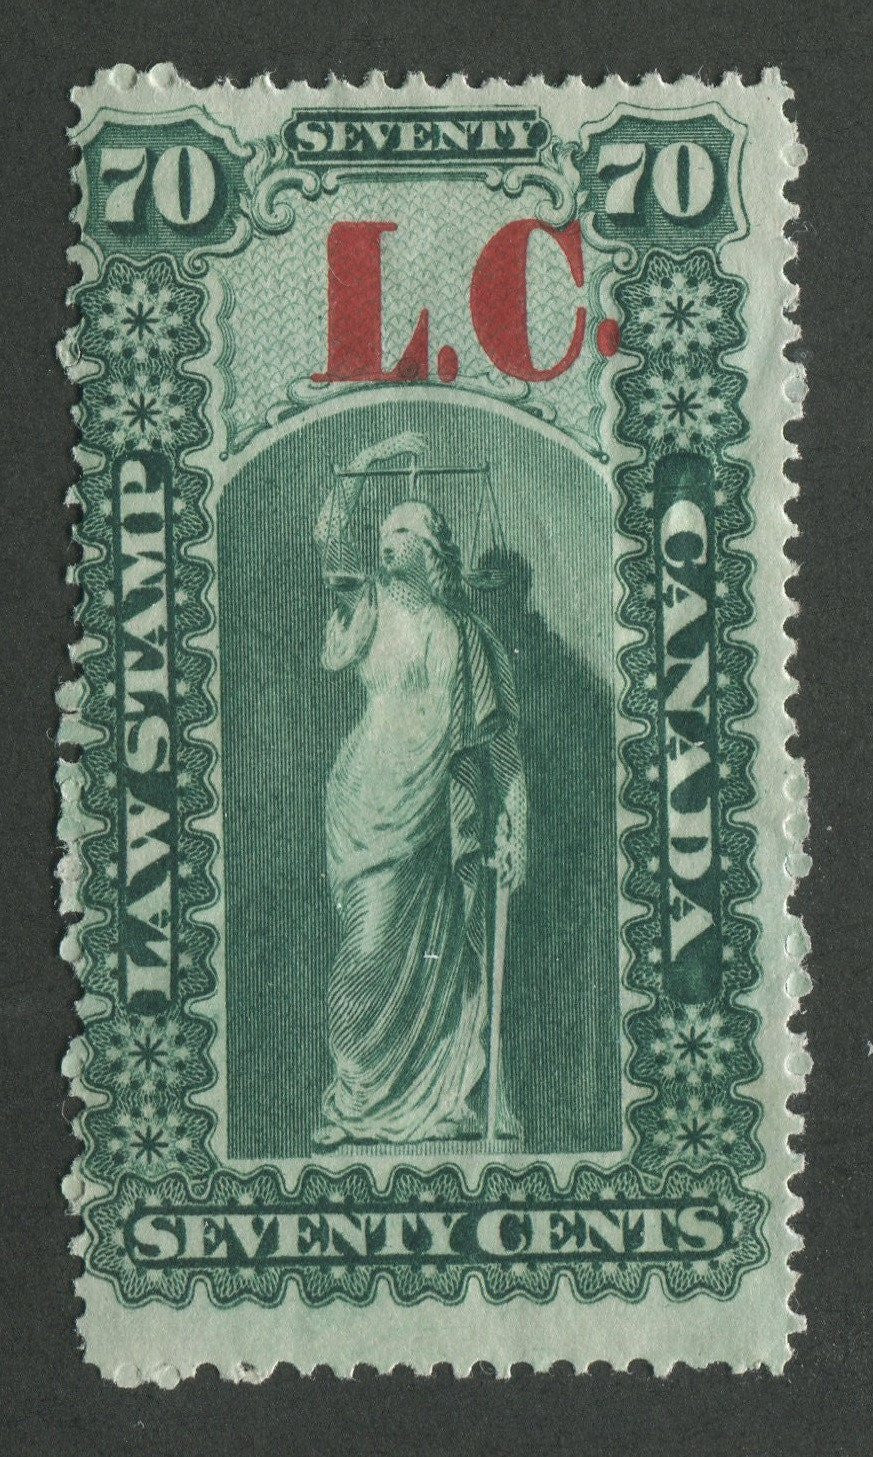 0007QL1707 - QL7 - Mint - UNLISTED - Deveney Stamps Ltd. Canadian Stamps